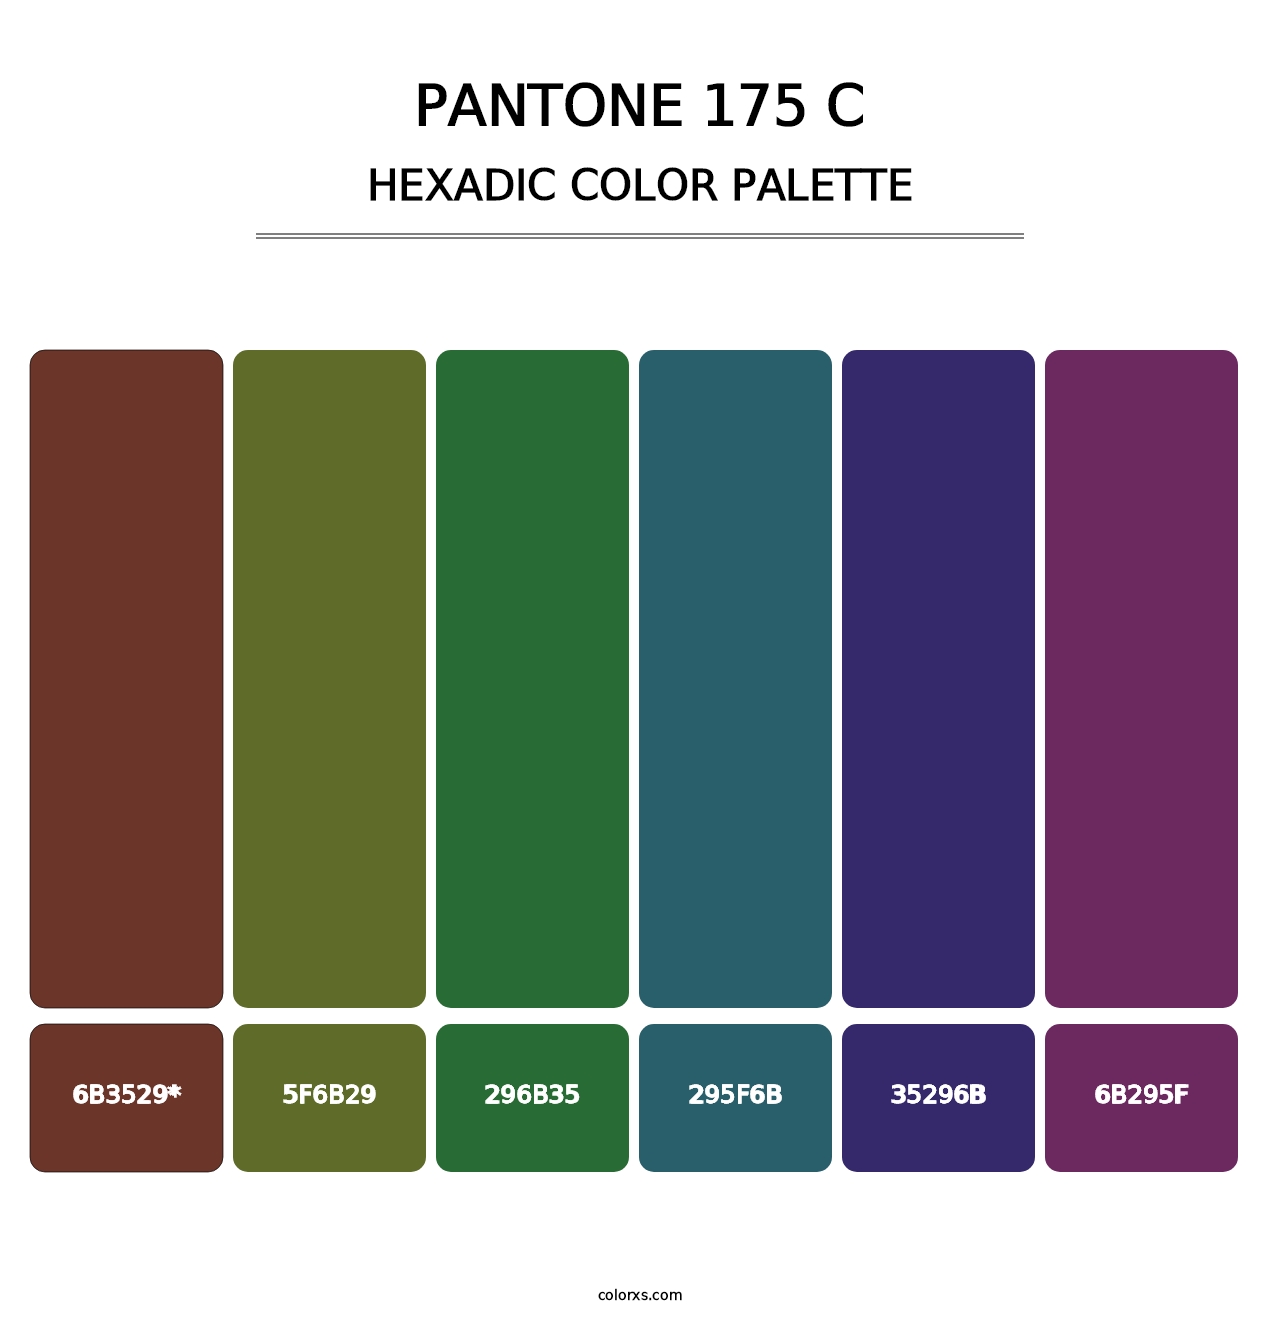 PANTONE 175 C - Hexadic Color Palette